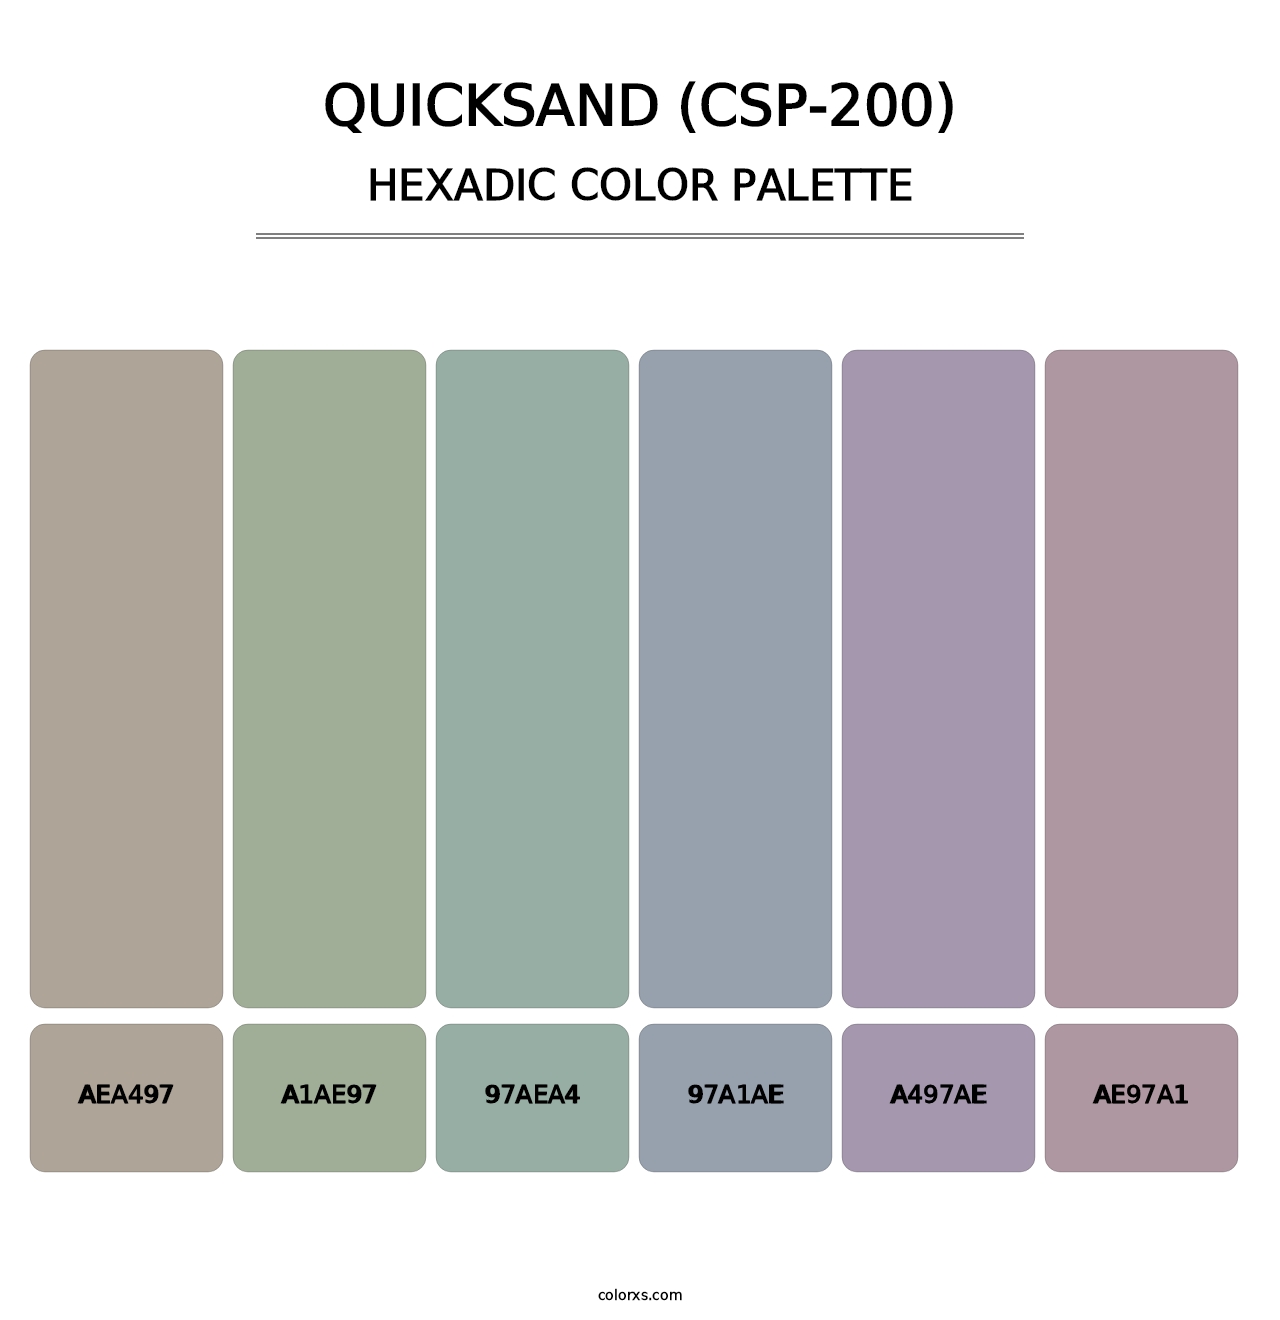 Quicksand (CSP-200) - Hexadic Color Palette